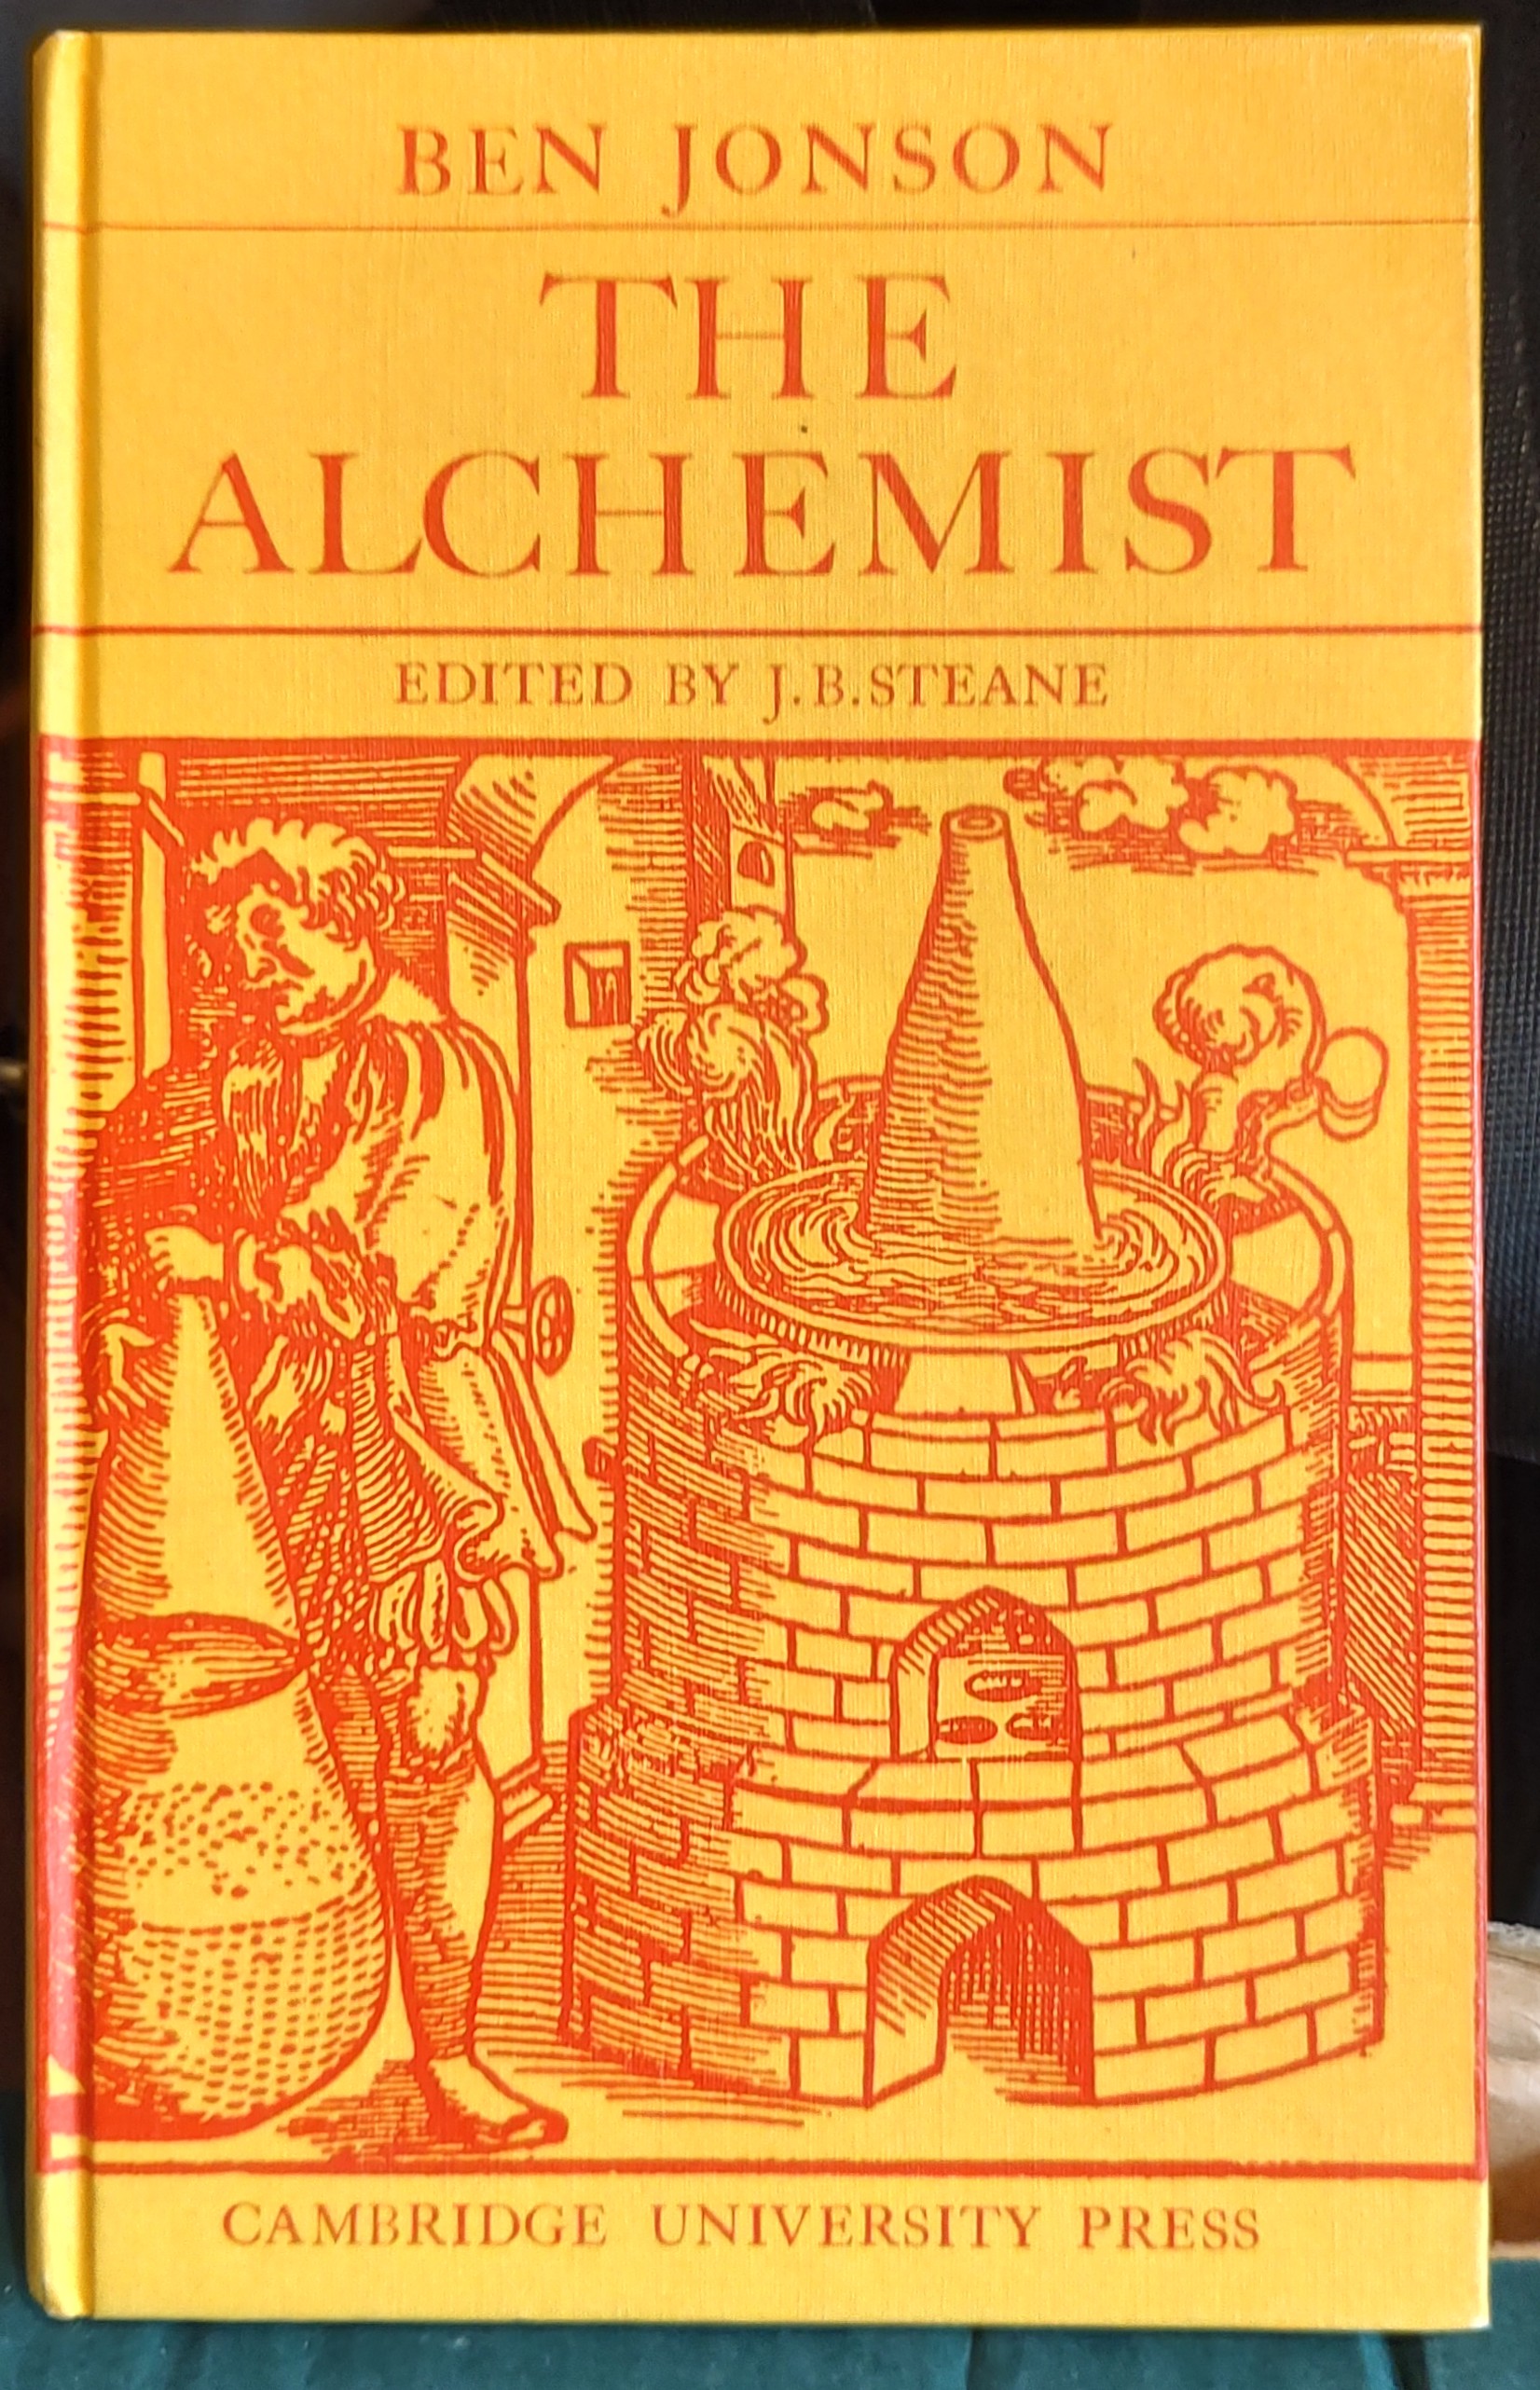 Ben Jonson The Alchemist - Ben Jonson / J B Steane (Editor)